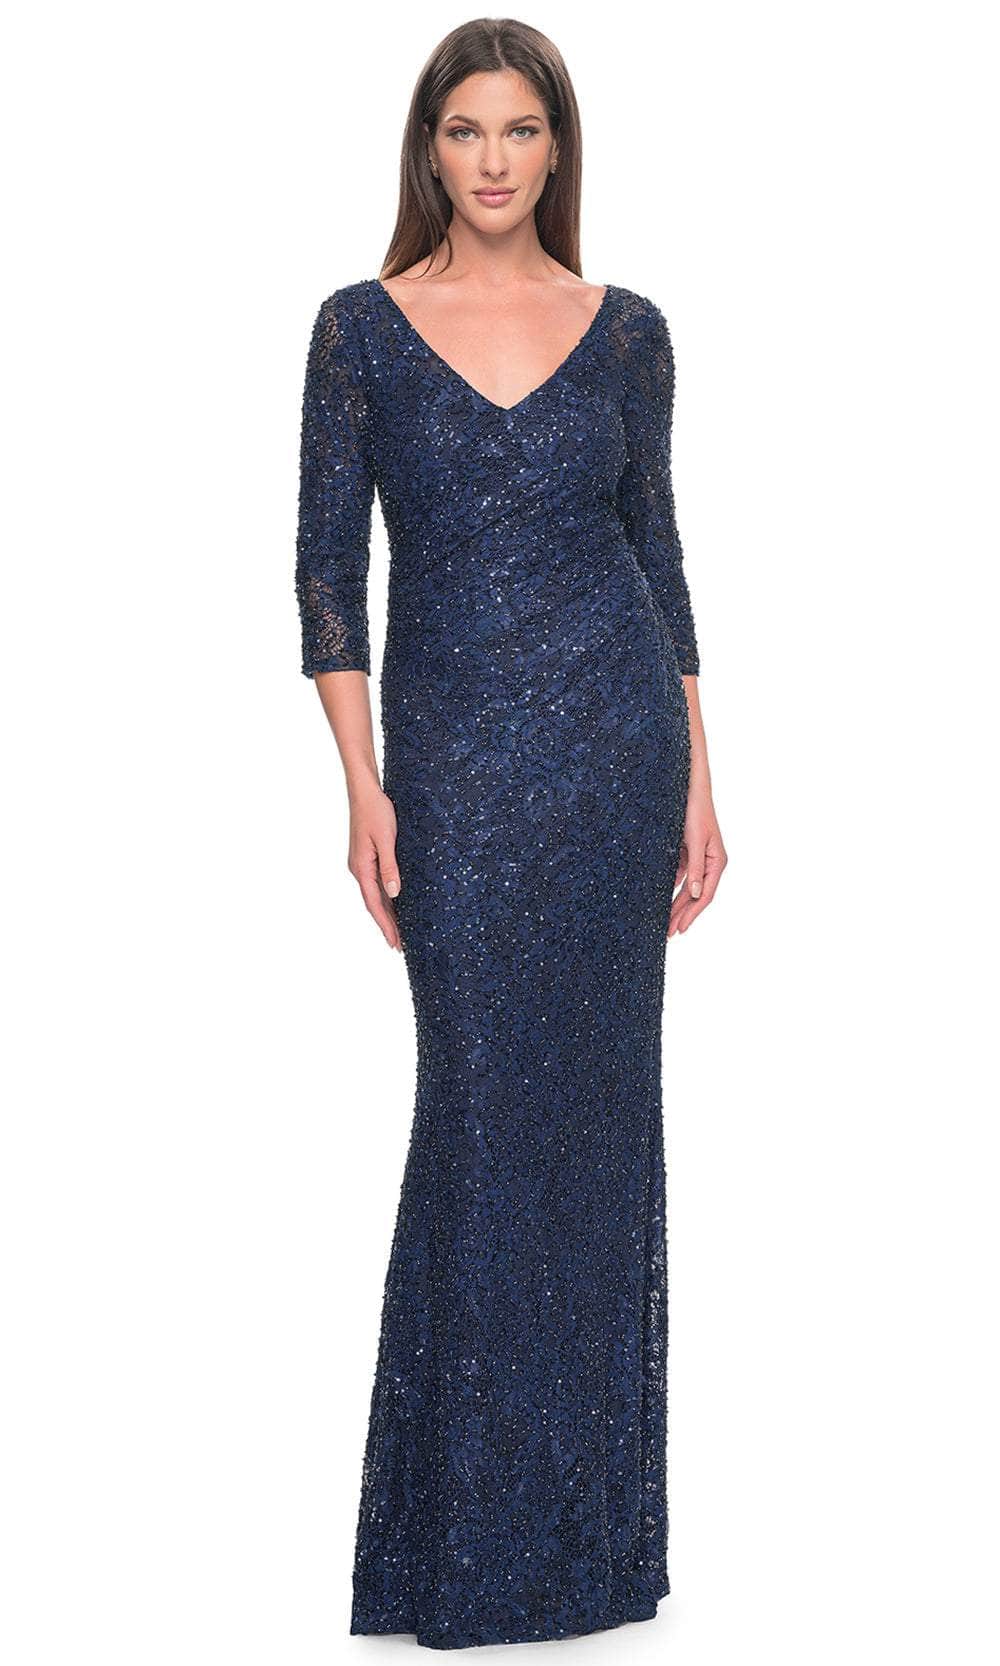 La Femme 31721 - Quarter Sleeve Lace Evening Dress Evening Dresses 4 / Navy